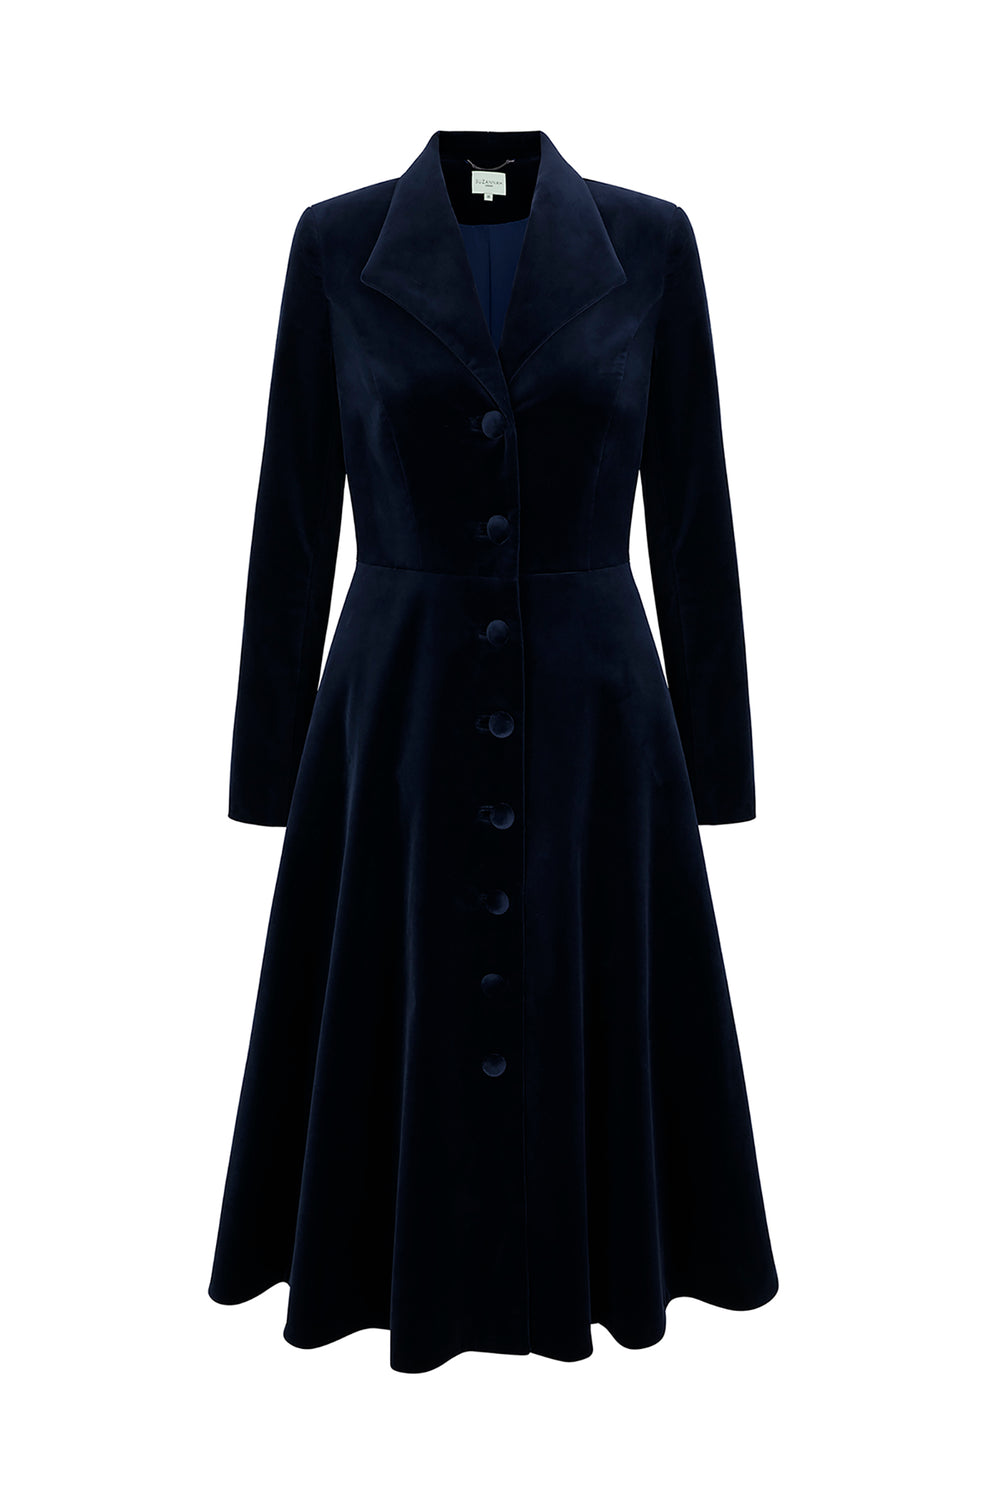 Navy Velvet Hunter Coat Dress | Luxury Occasion Coats | Suzannah London